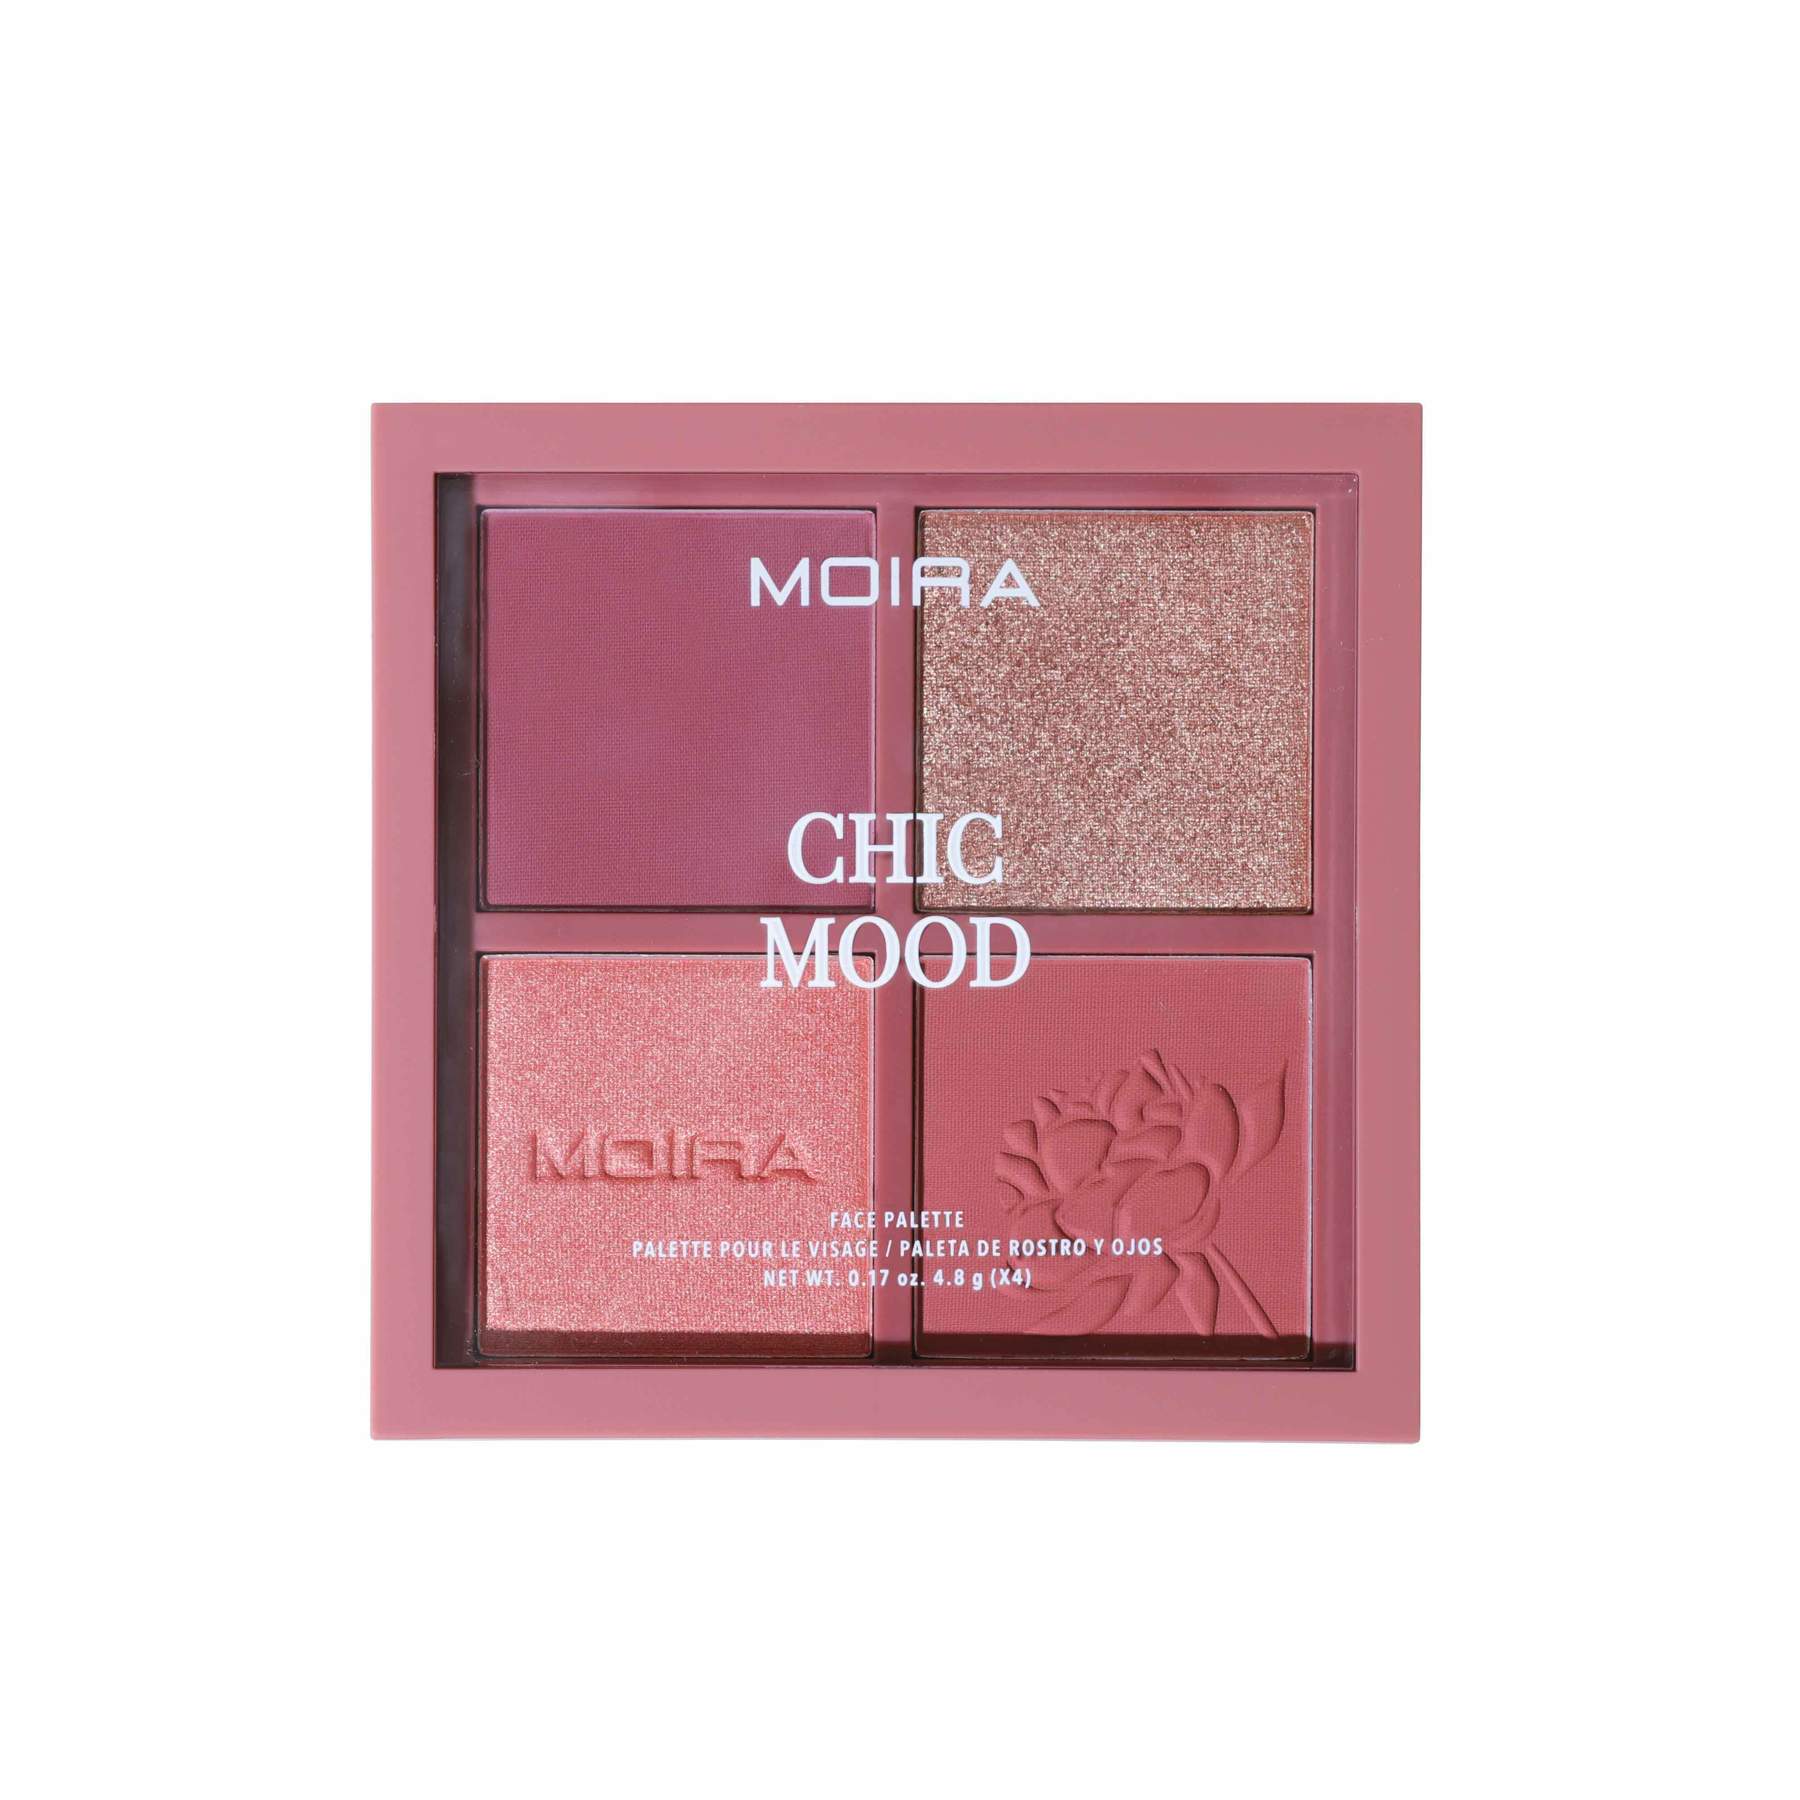 Moira Beauty - Chic Mood Face Palette